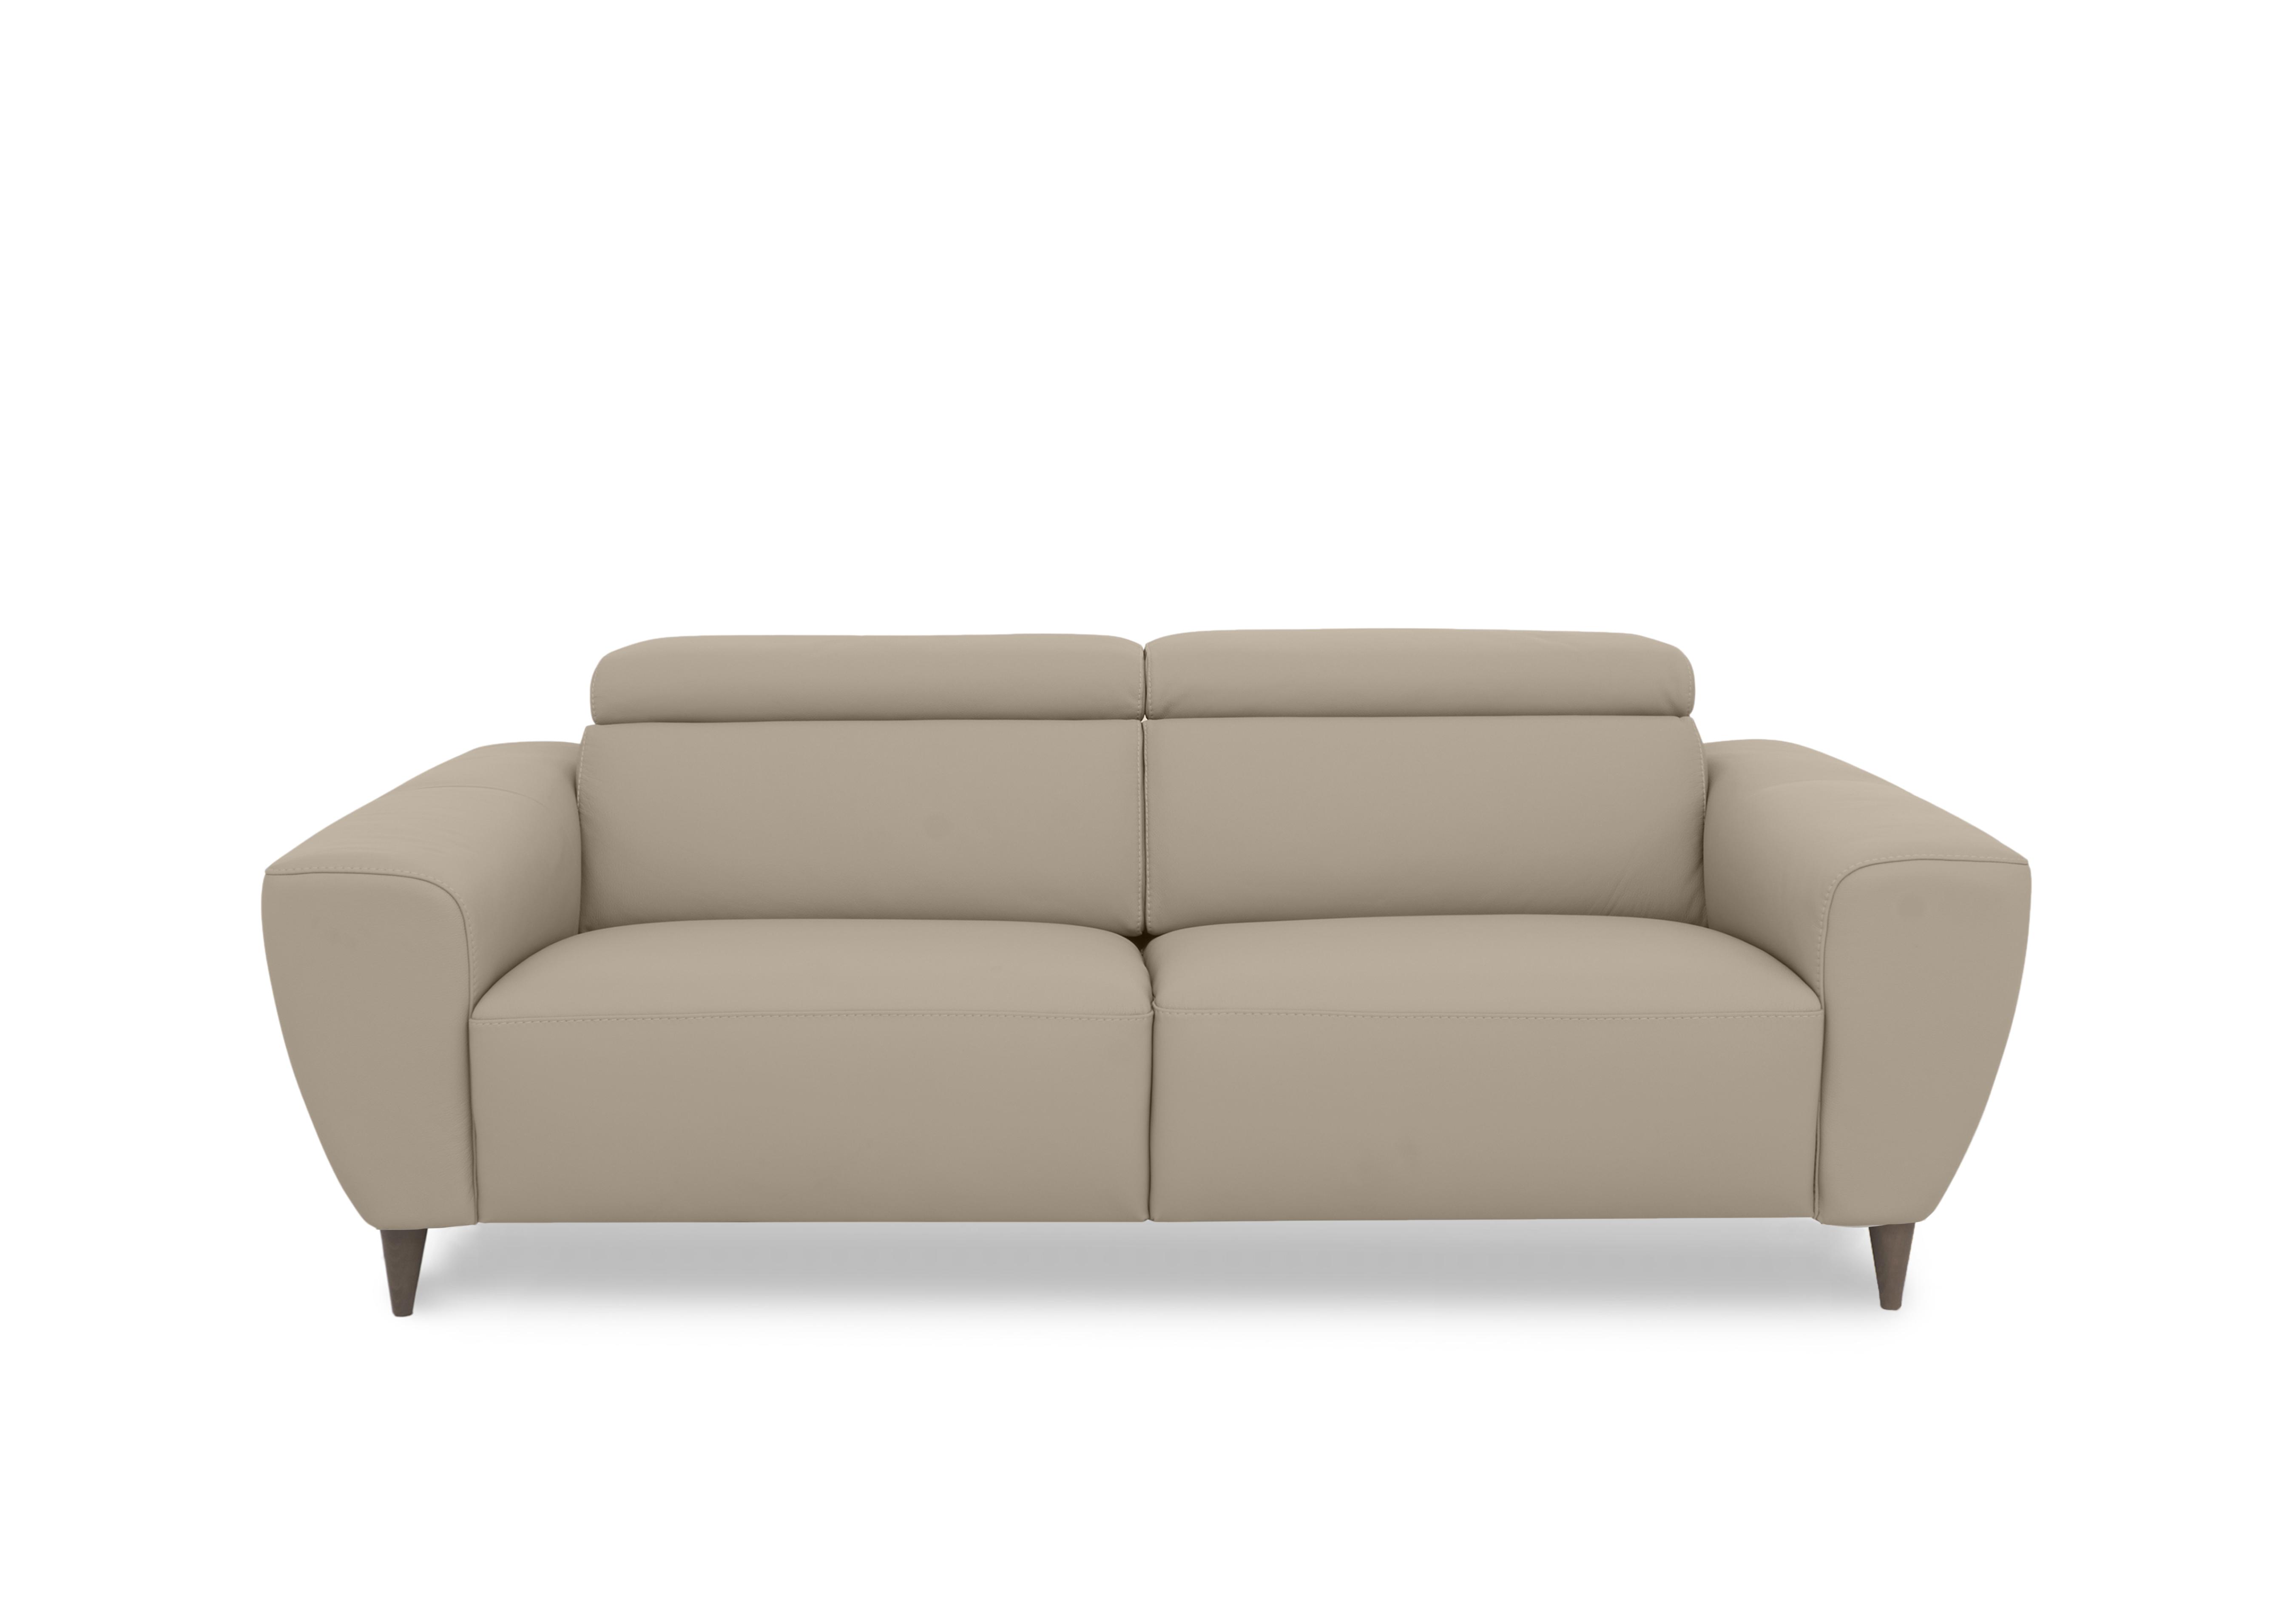 Milano 3 Seater Leather Sofa in 352 Torello Fango To Ft on Furniture Village